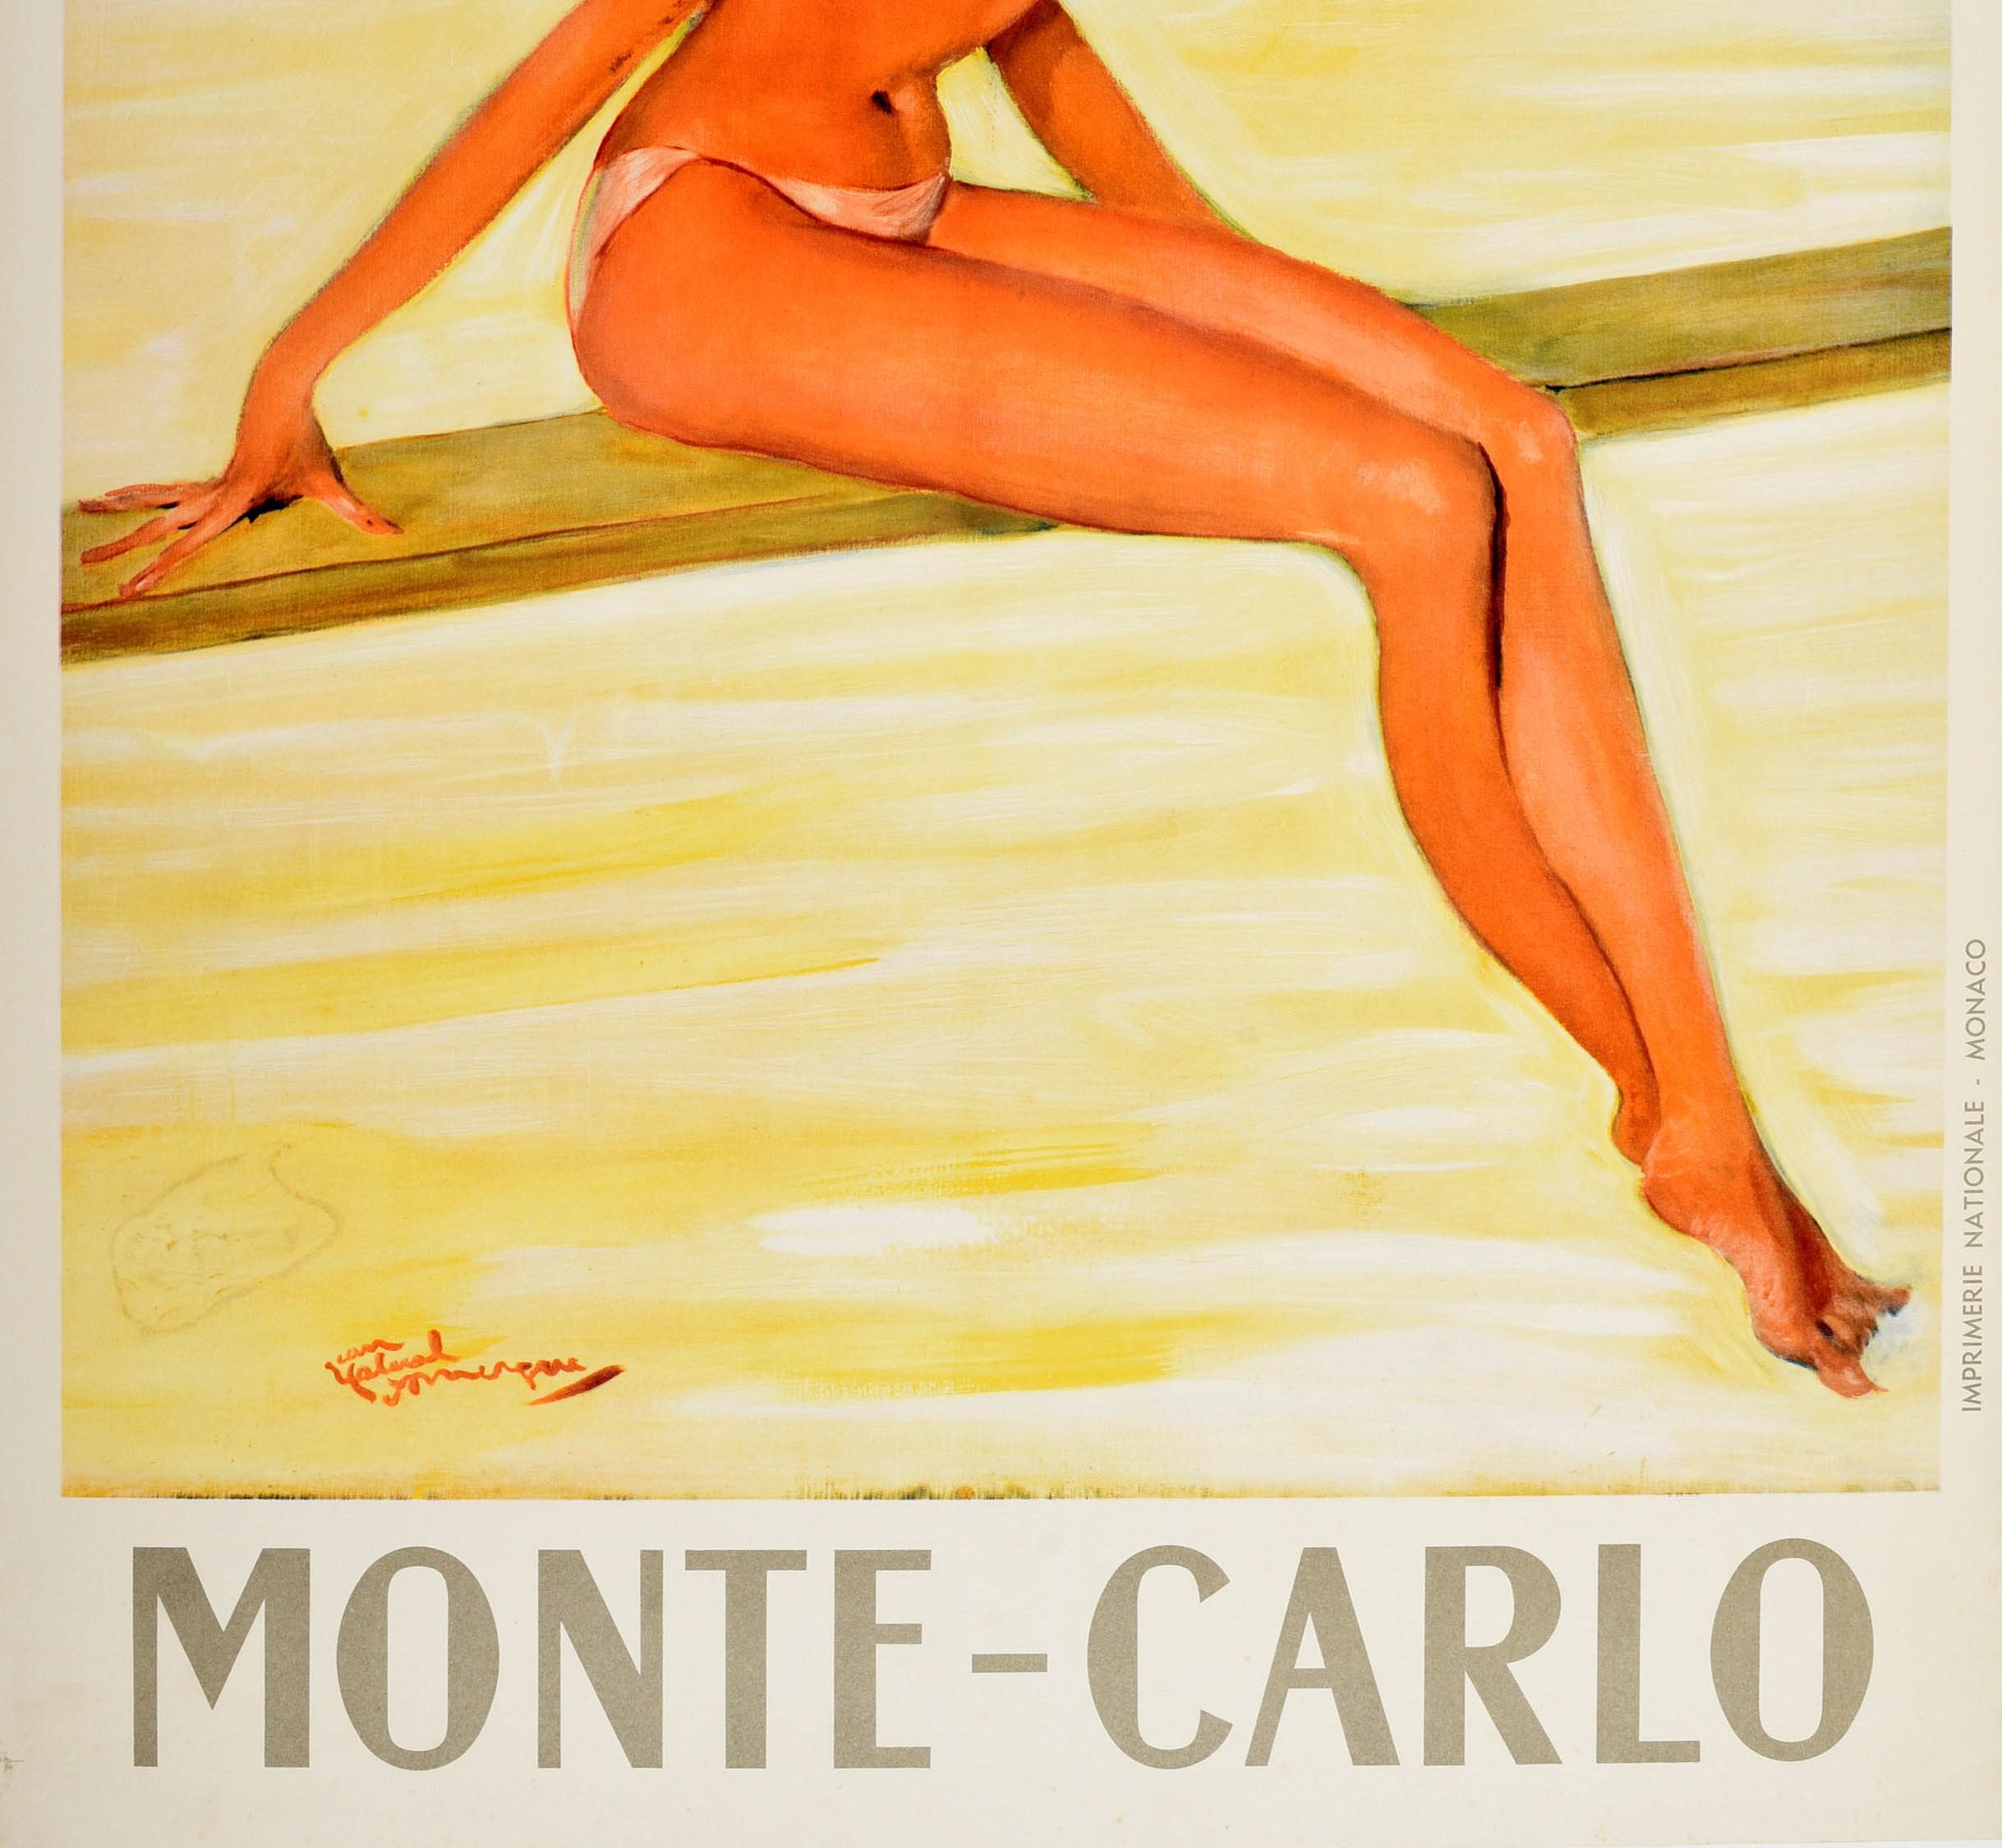 Monacan Original Vintage Travel Poster For Monte Carlo Diving Board Girl Pin Up Design